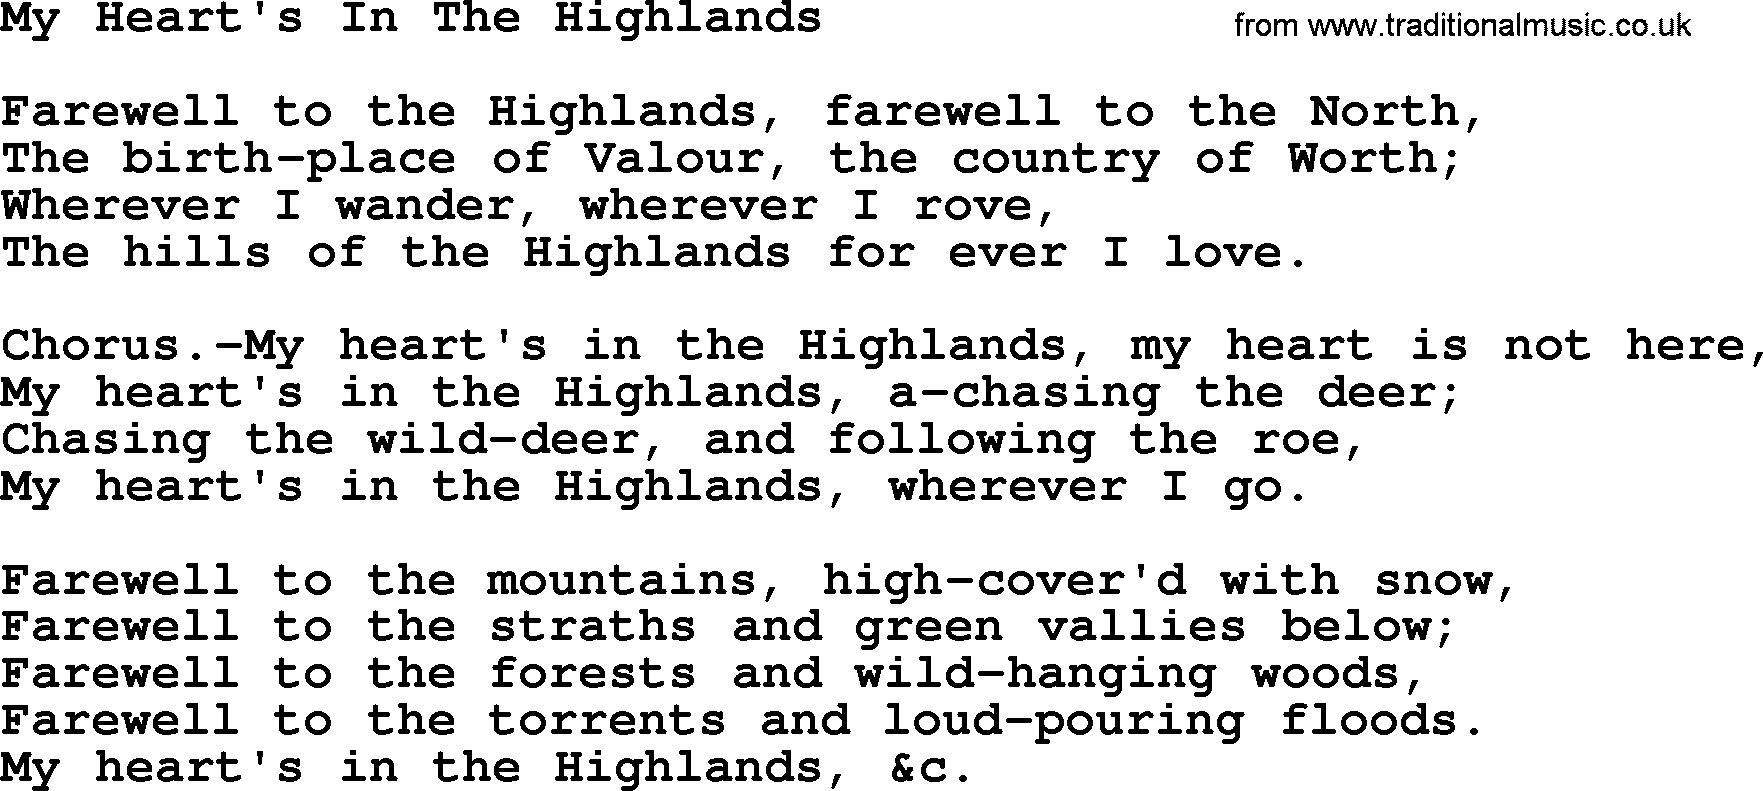 Robert Burns Songs & Lyrics: My Heart's In The Highlands